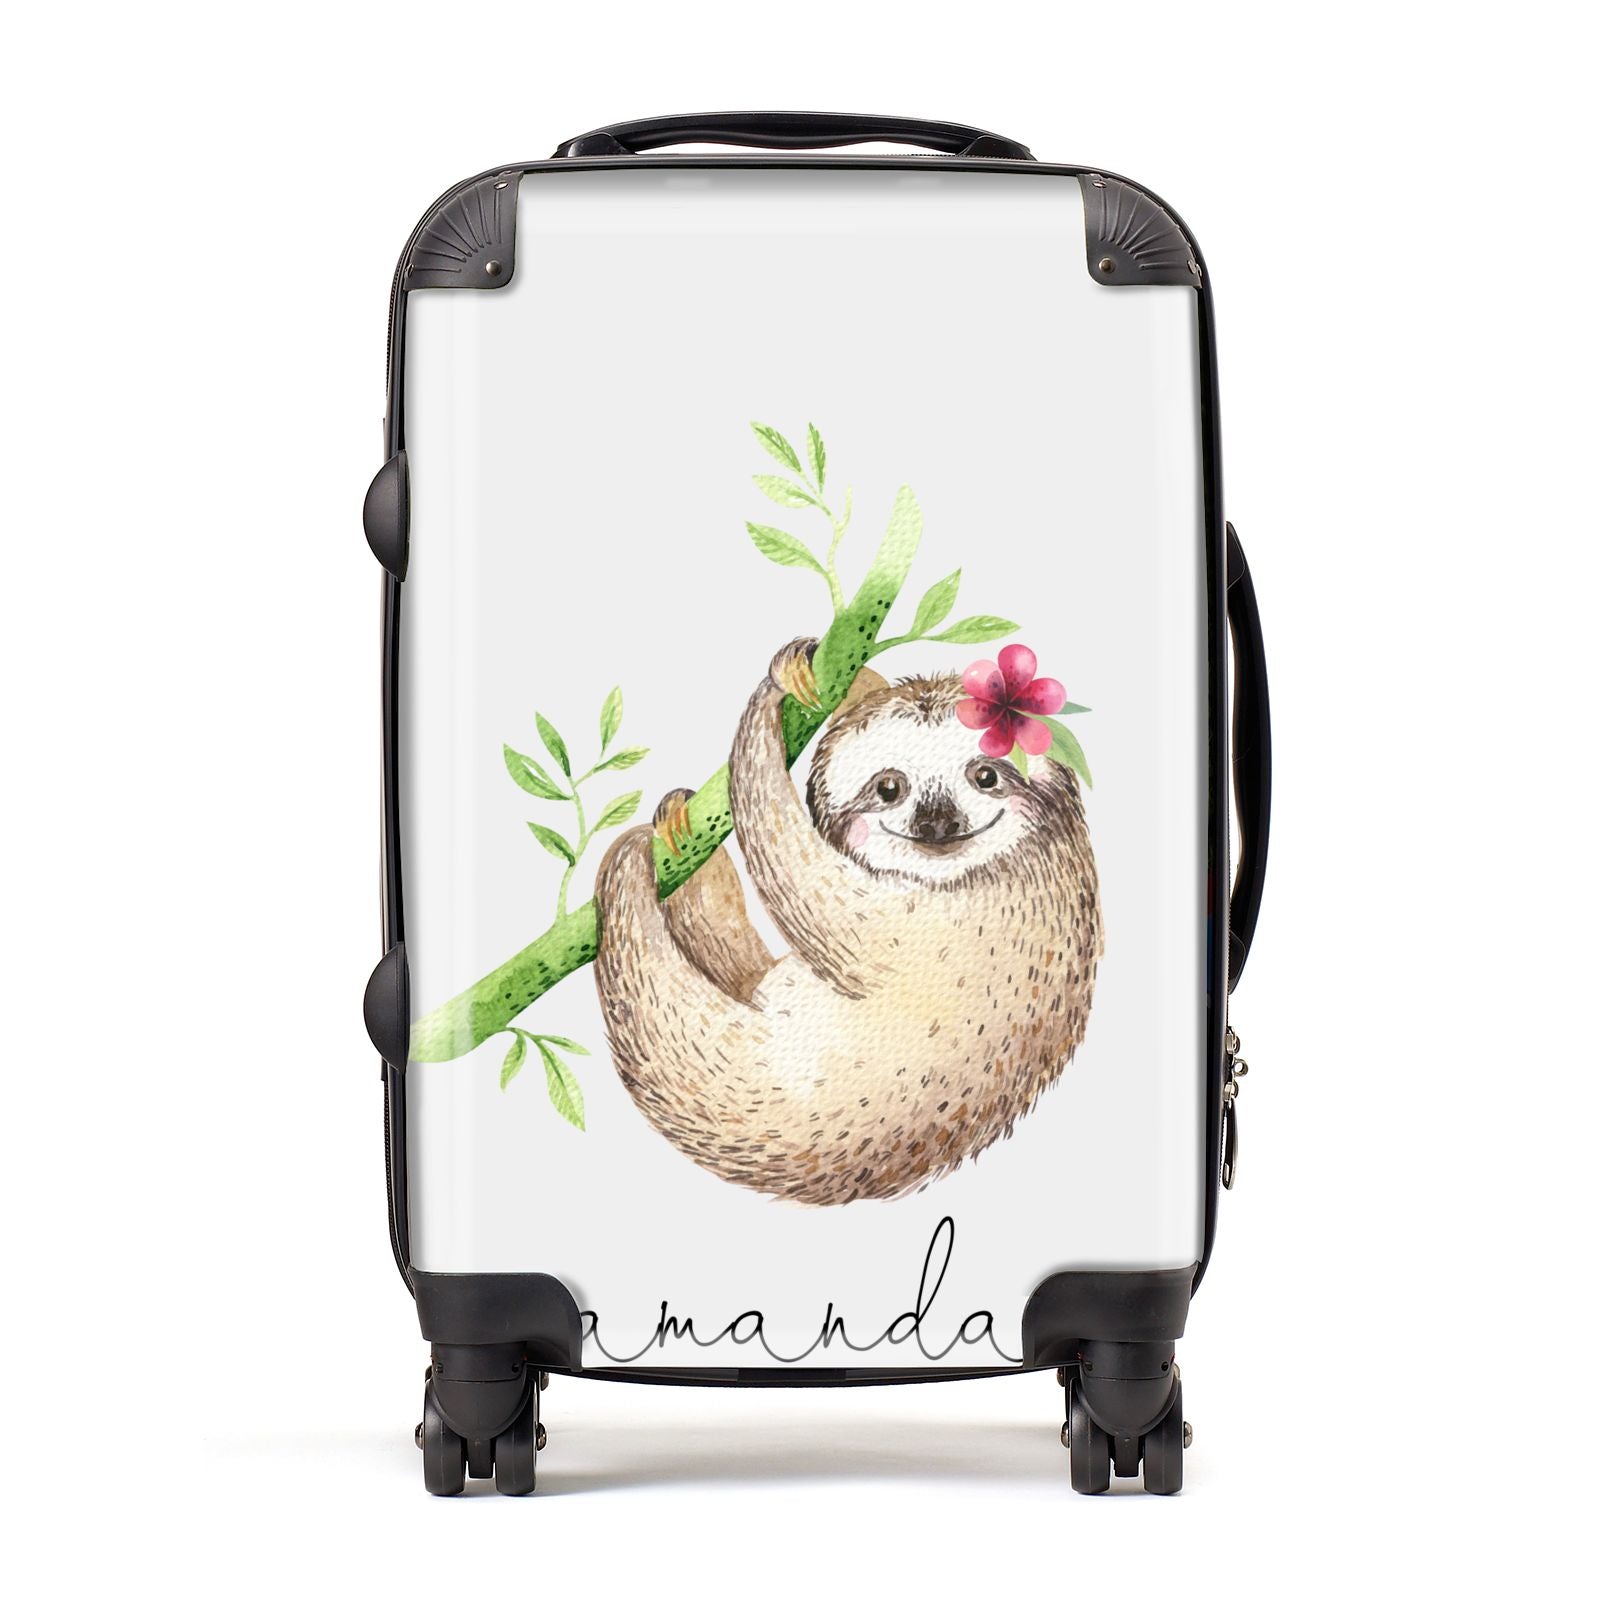 Personalised Sloth Suitcase